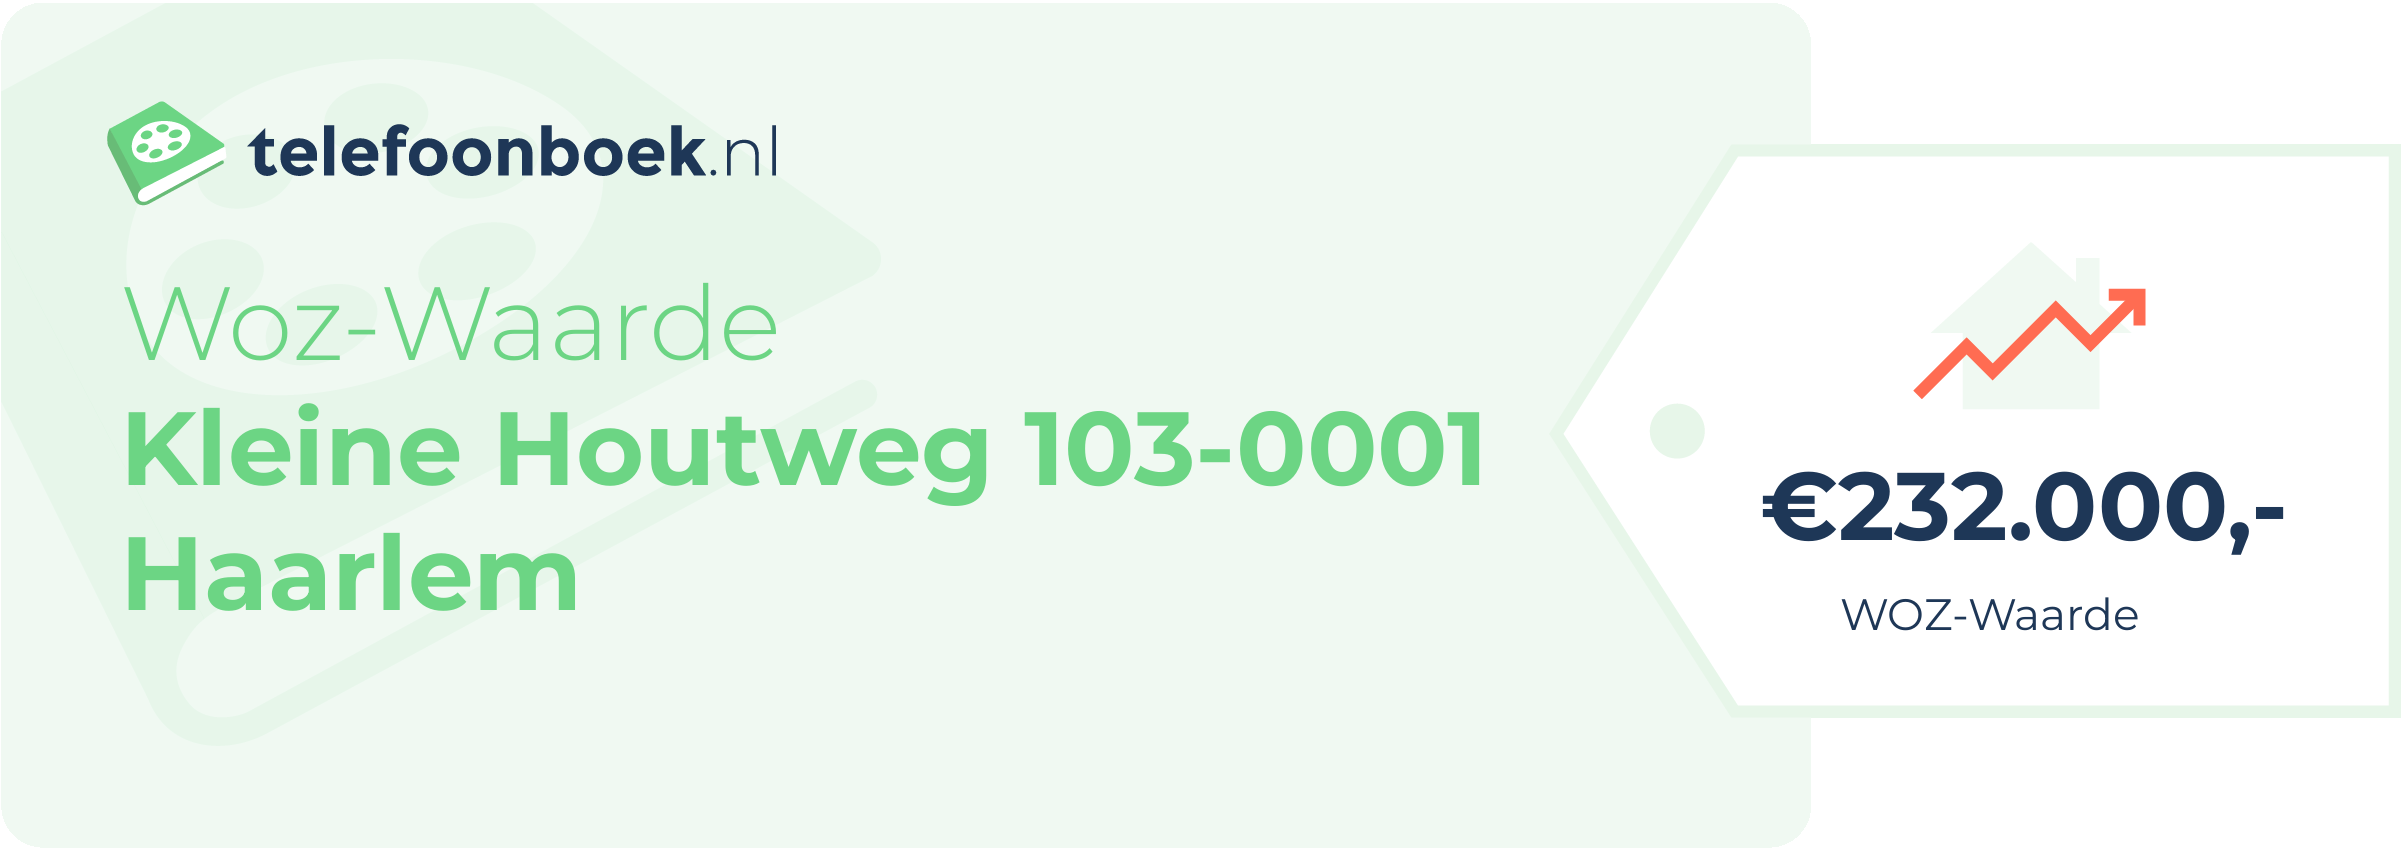 WOZ-waarde Kleine Houtweg 103-0001 Haarlem